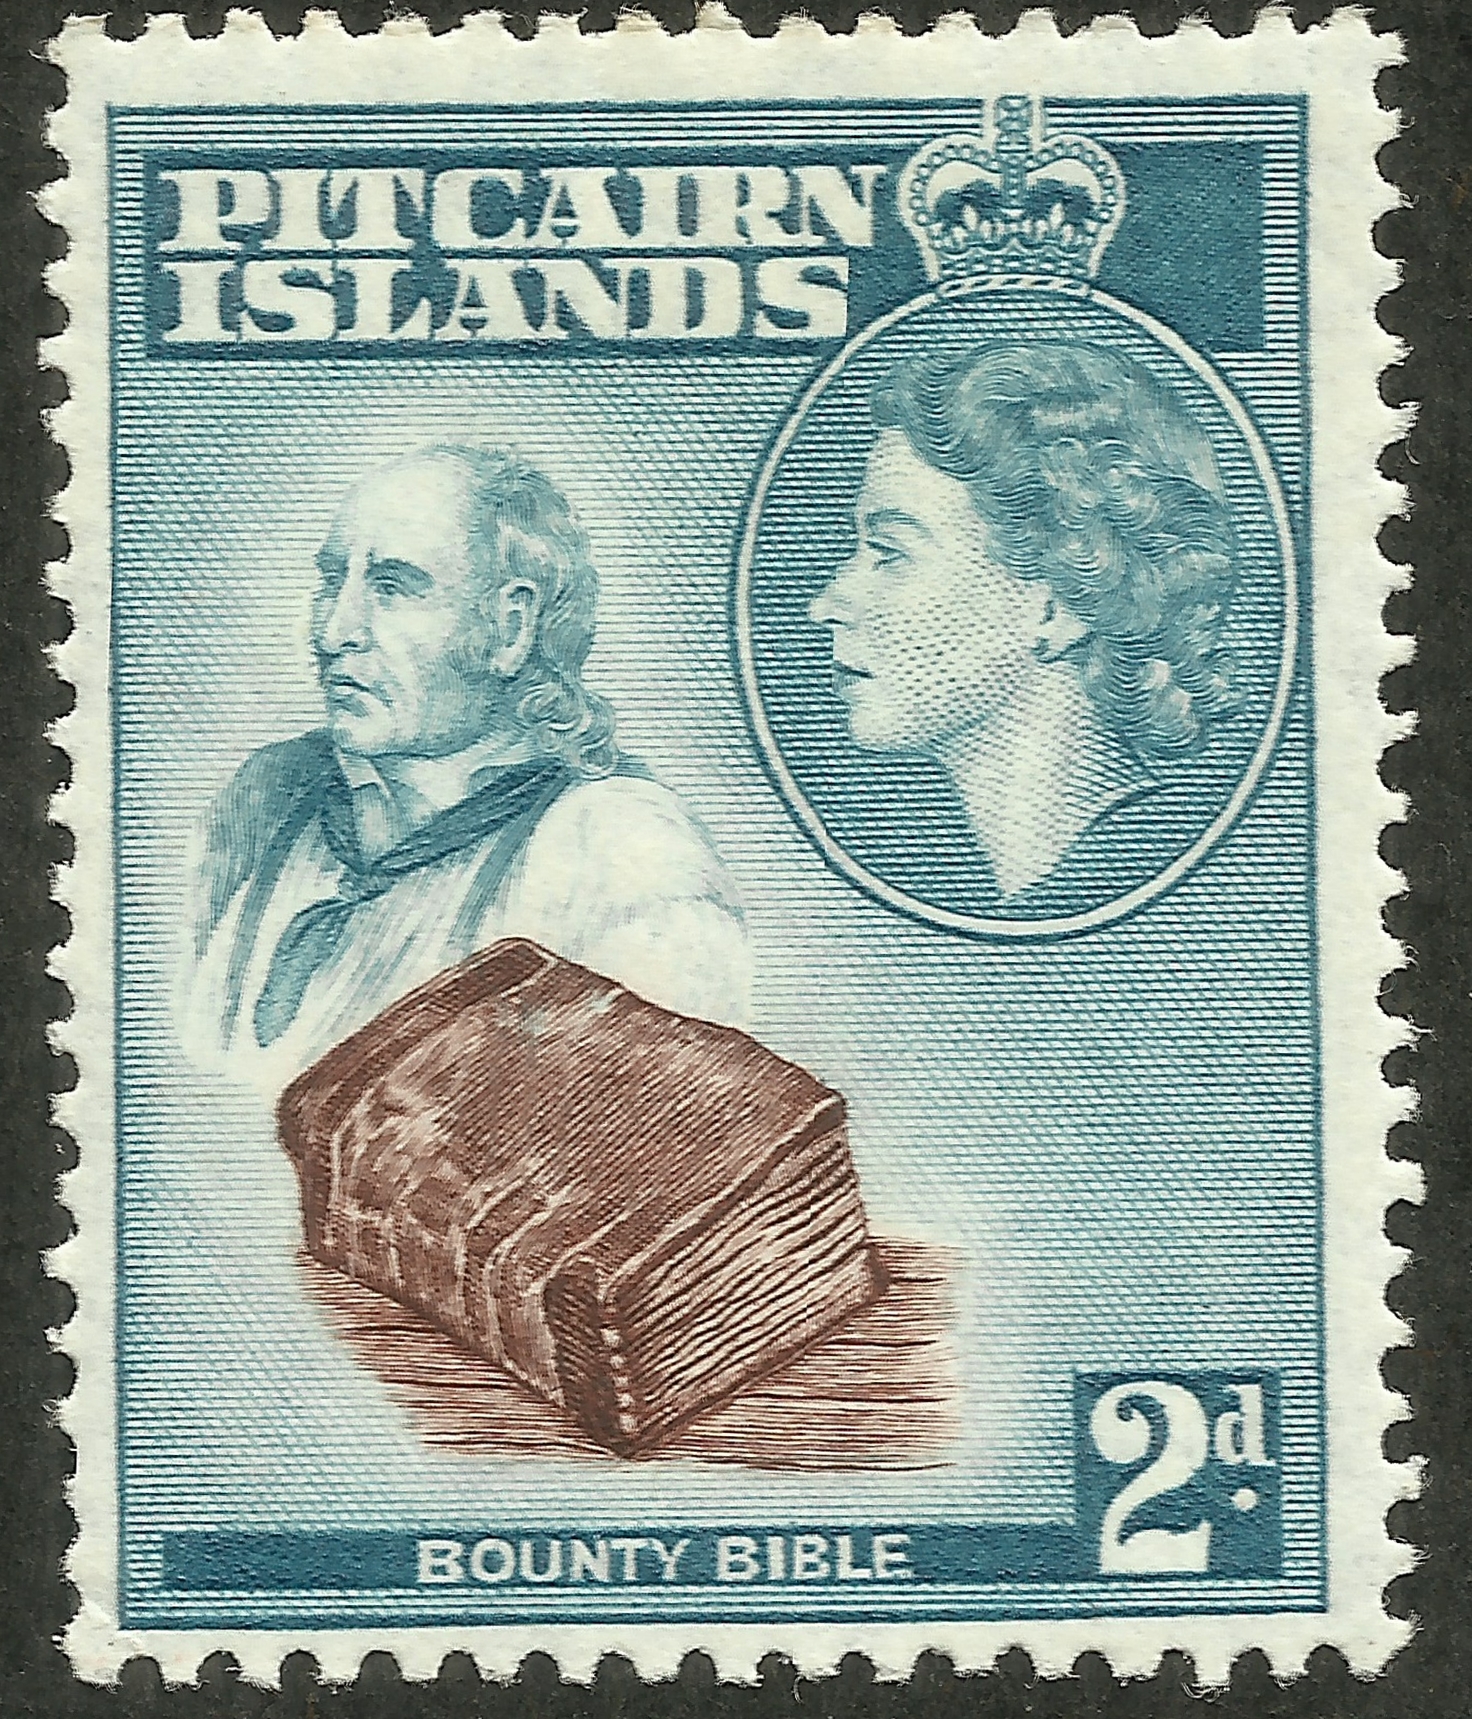 Pitcairn Islands - Scott #22 (1957) picturing John Adams and the Bounty Bible.